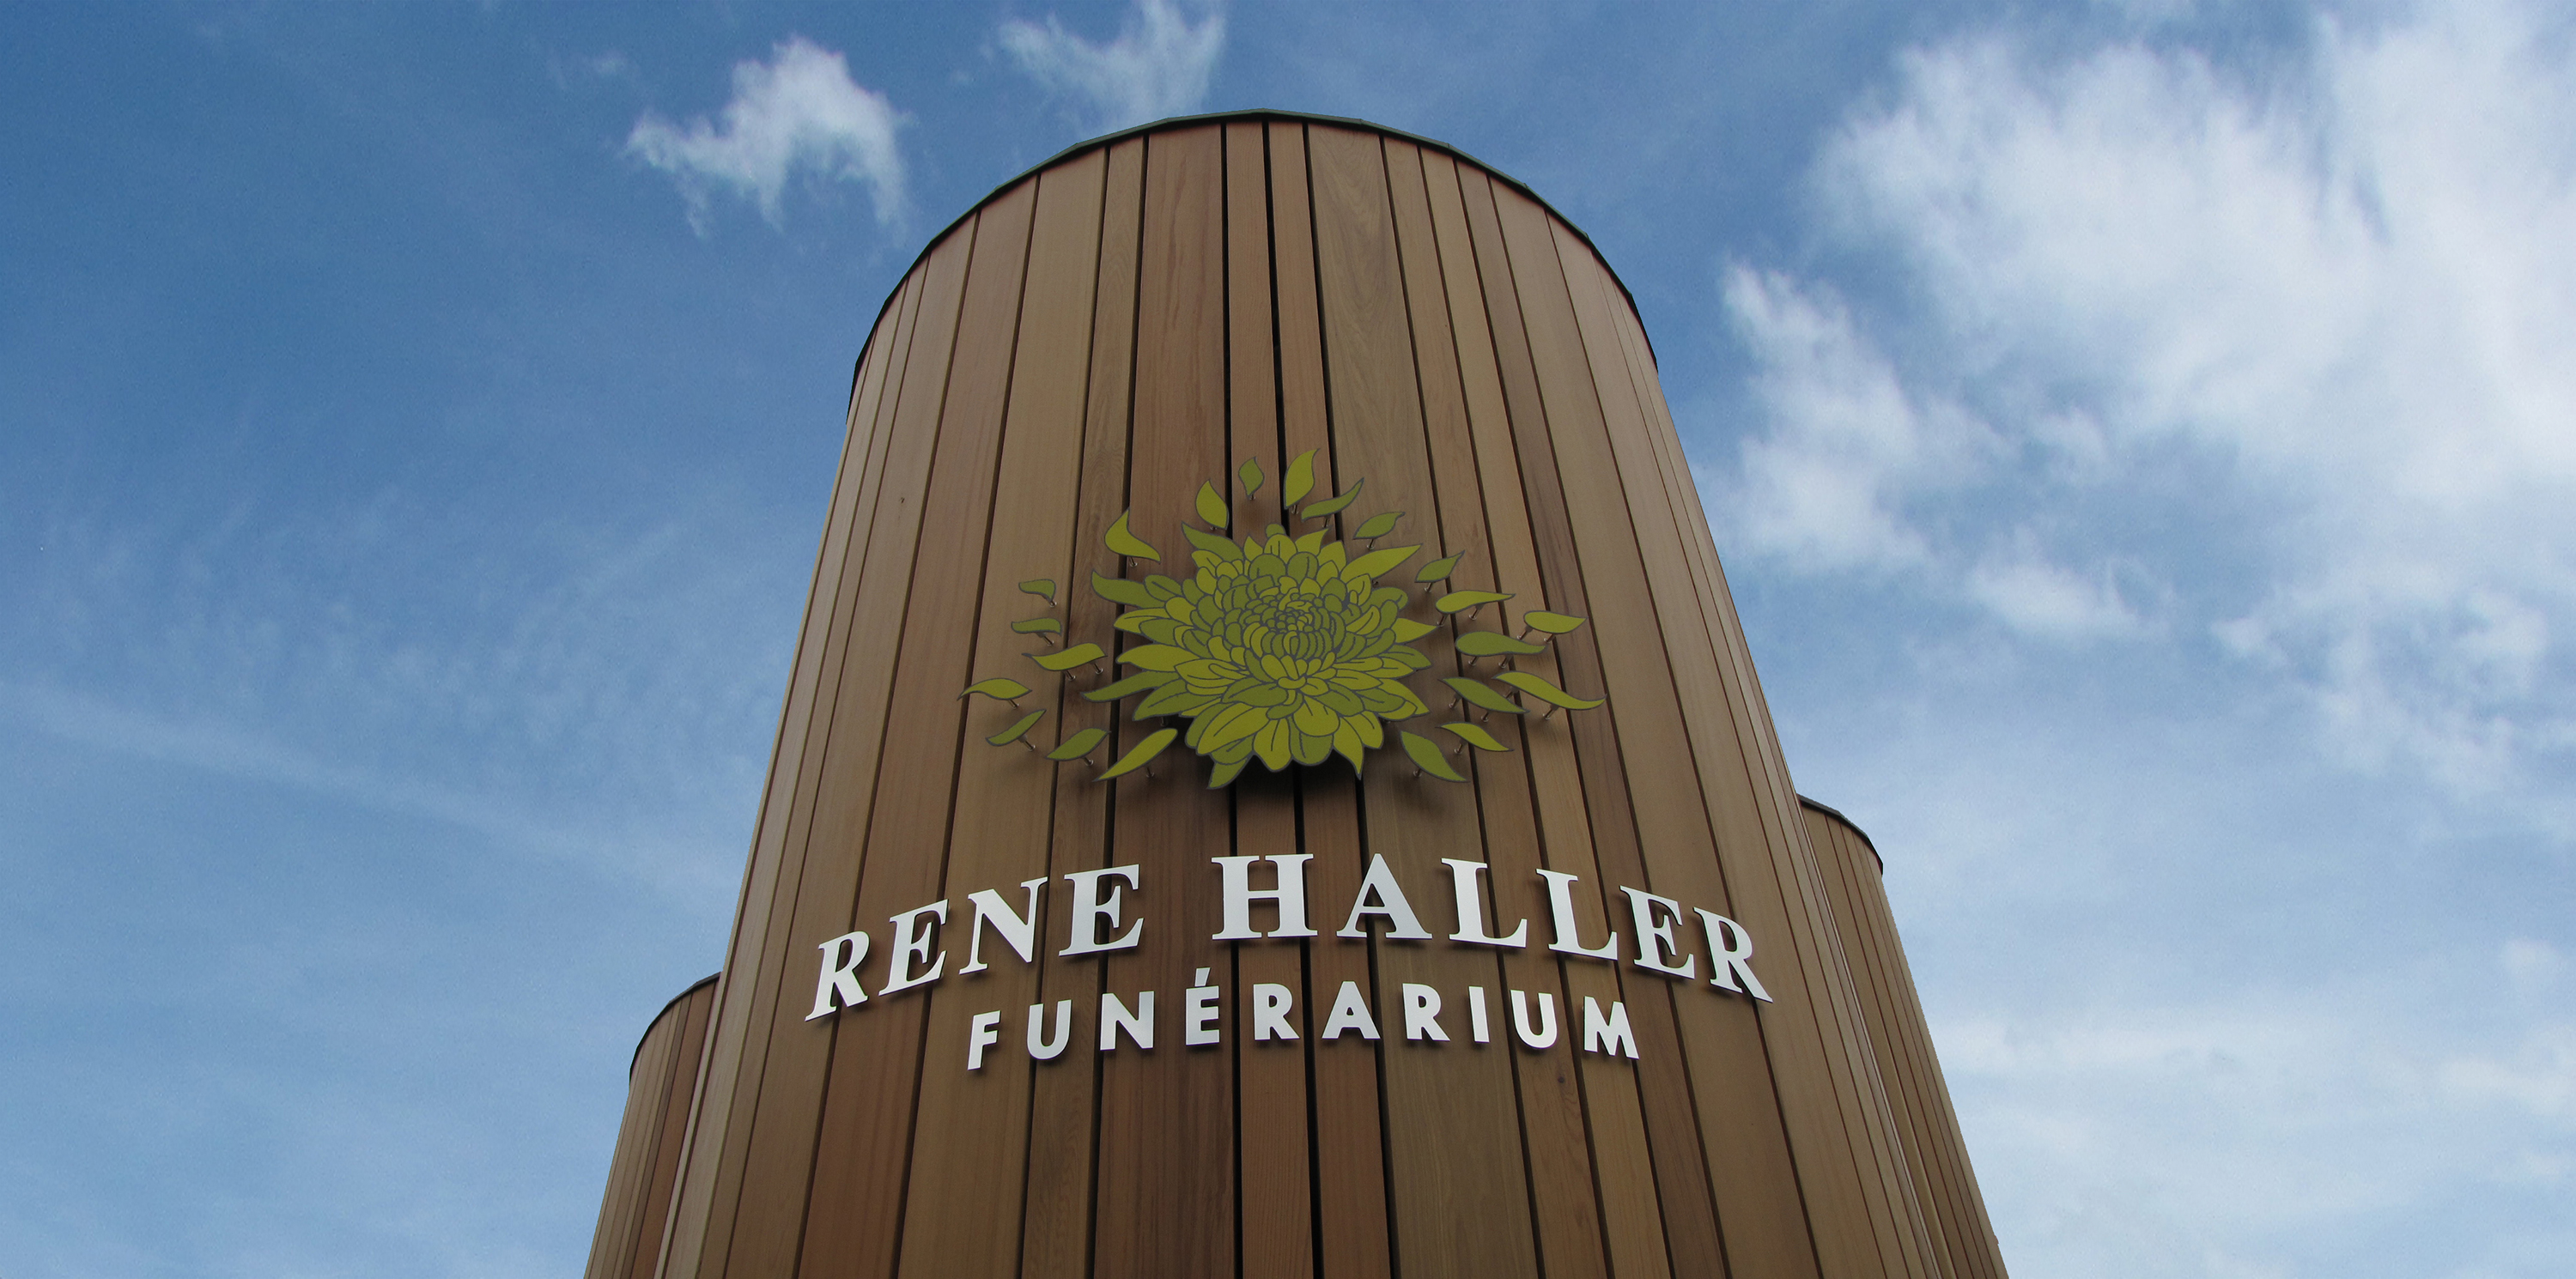 RENE HALLER - Histoire